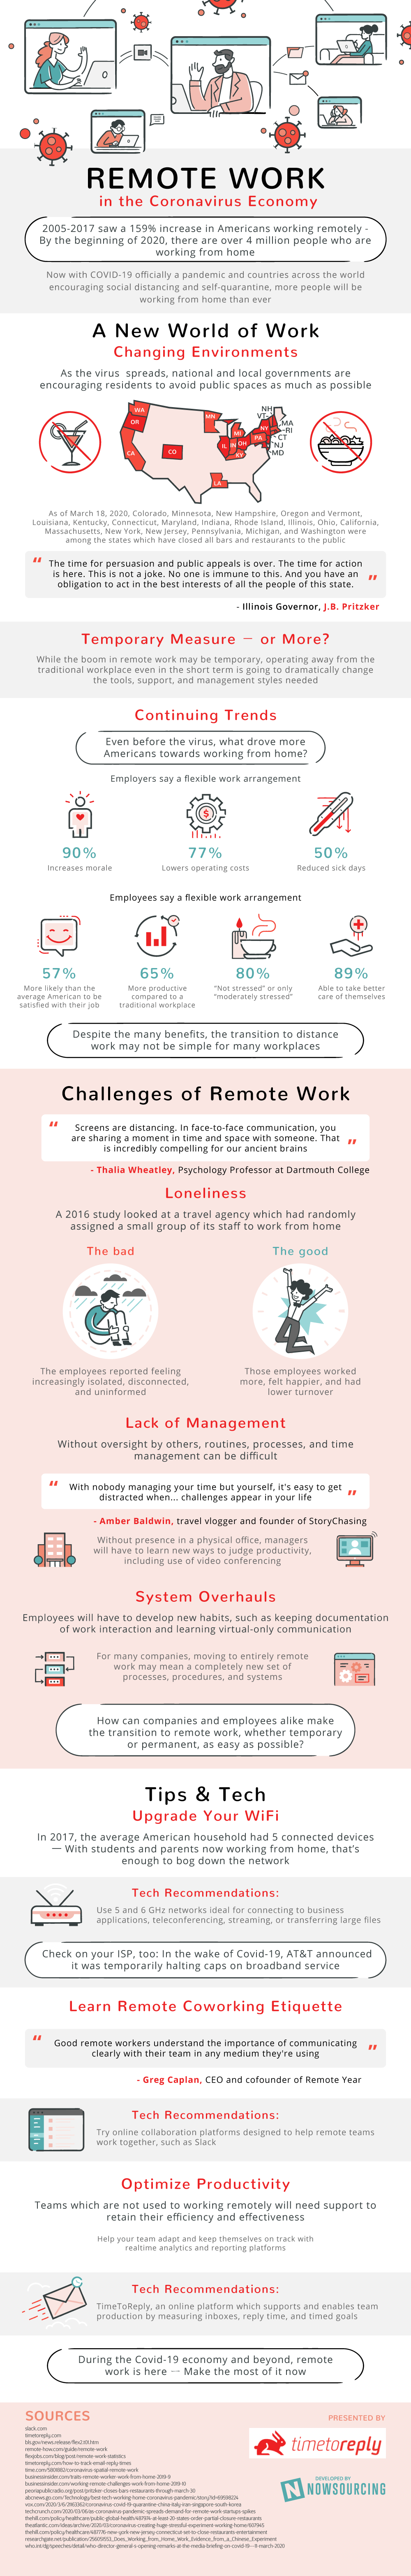 Remote Work In The Coronavirus Economy - Infographic